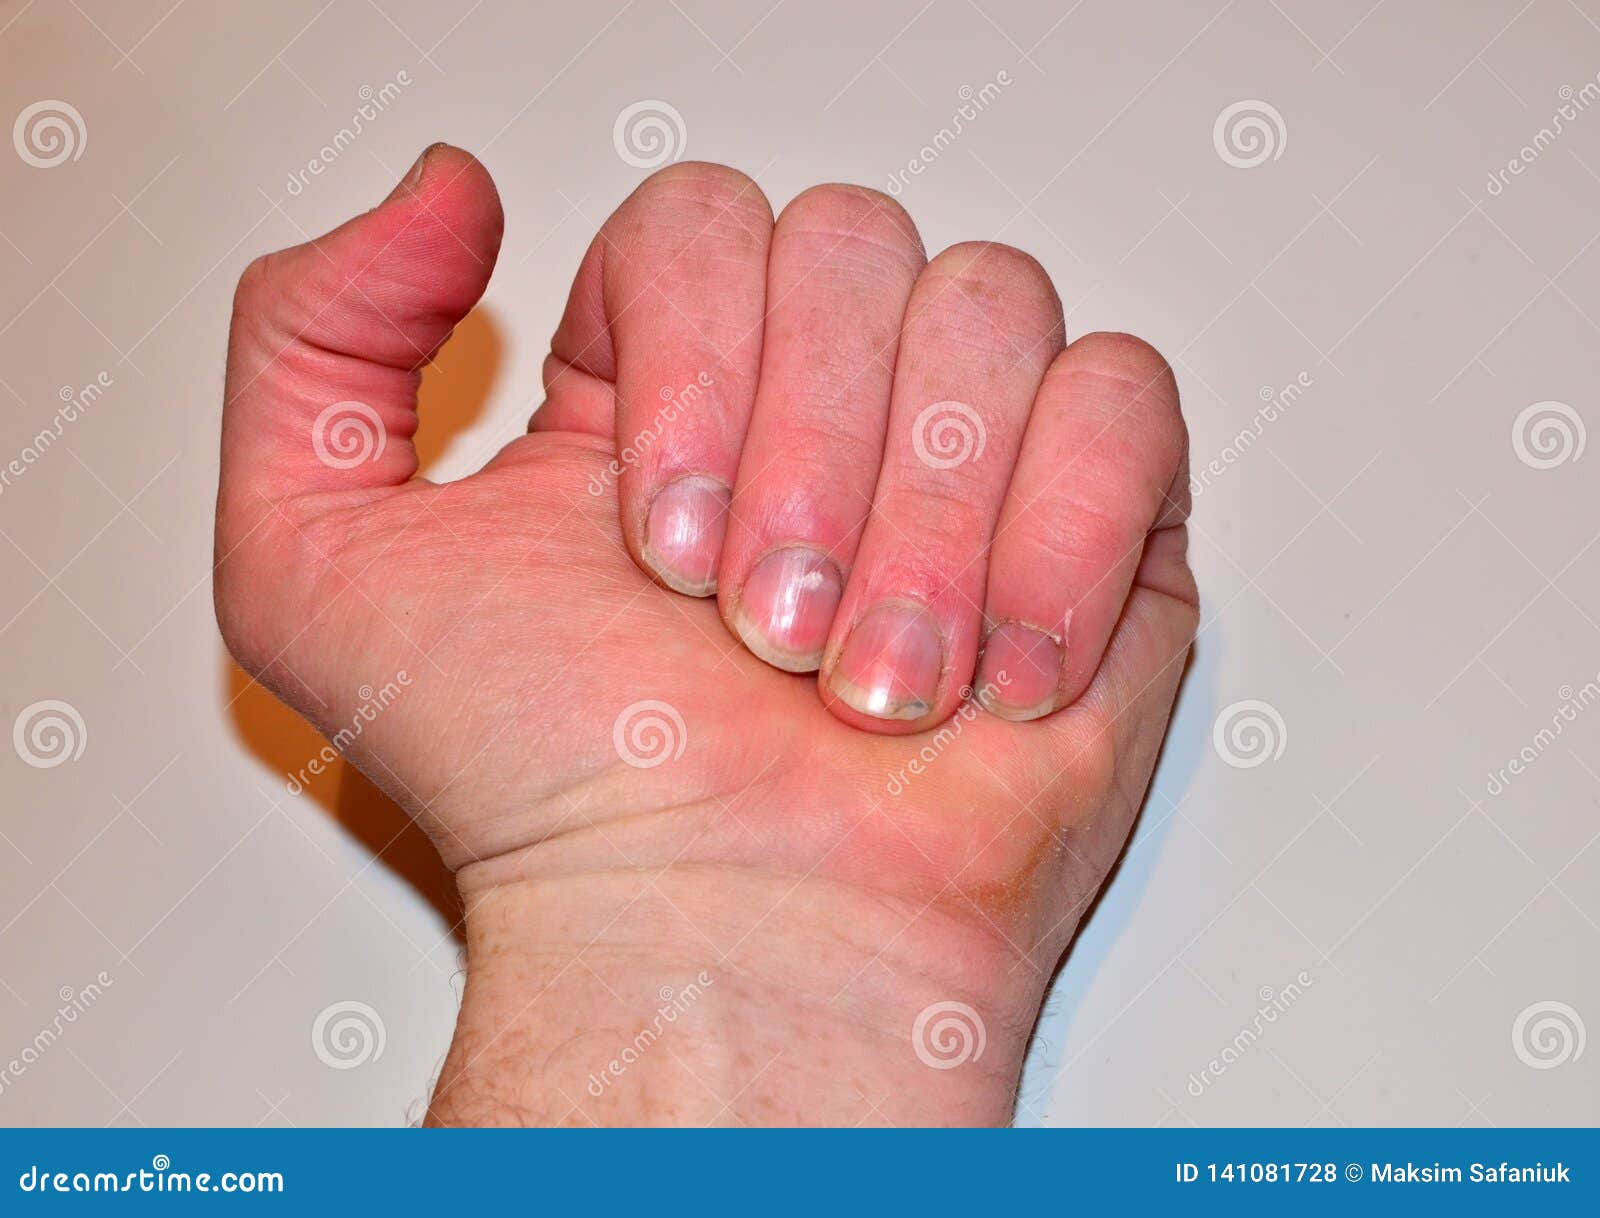 male nails disease fingernail lack nutrients do not make nail not shape not care health care concept male nails disease 141081728